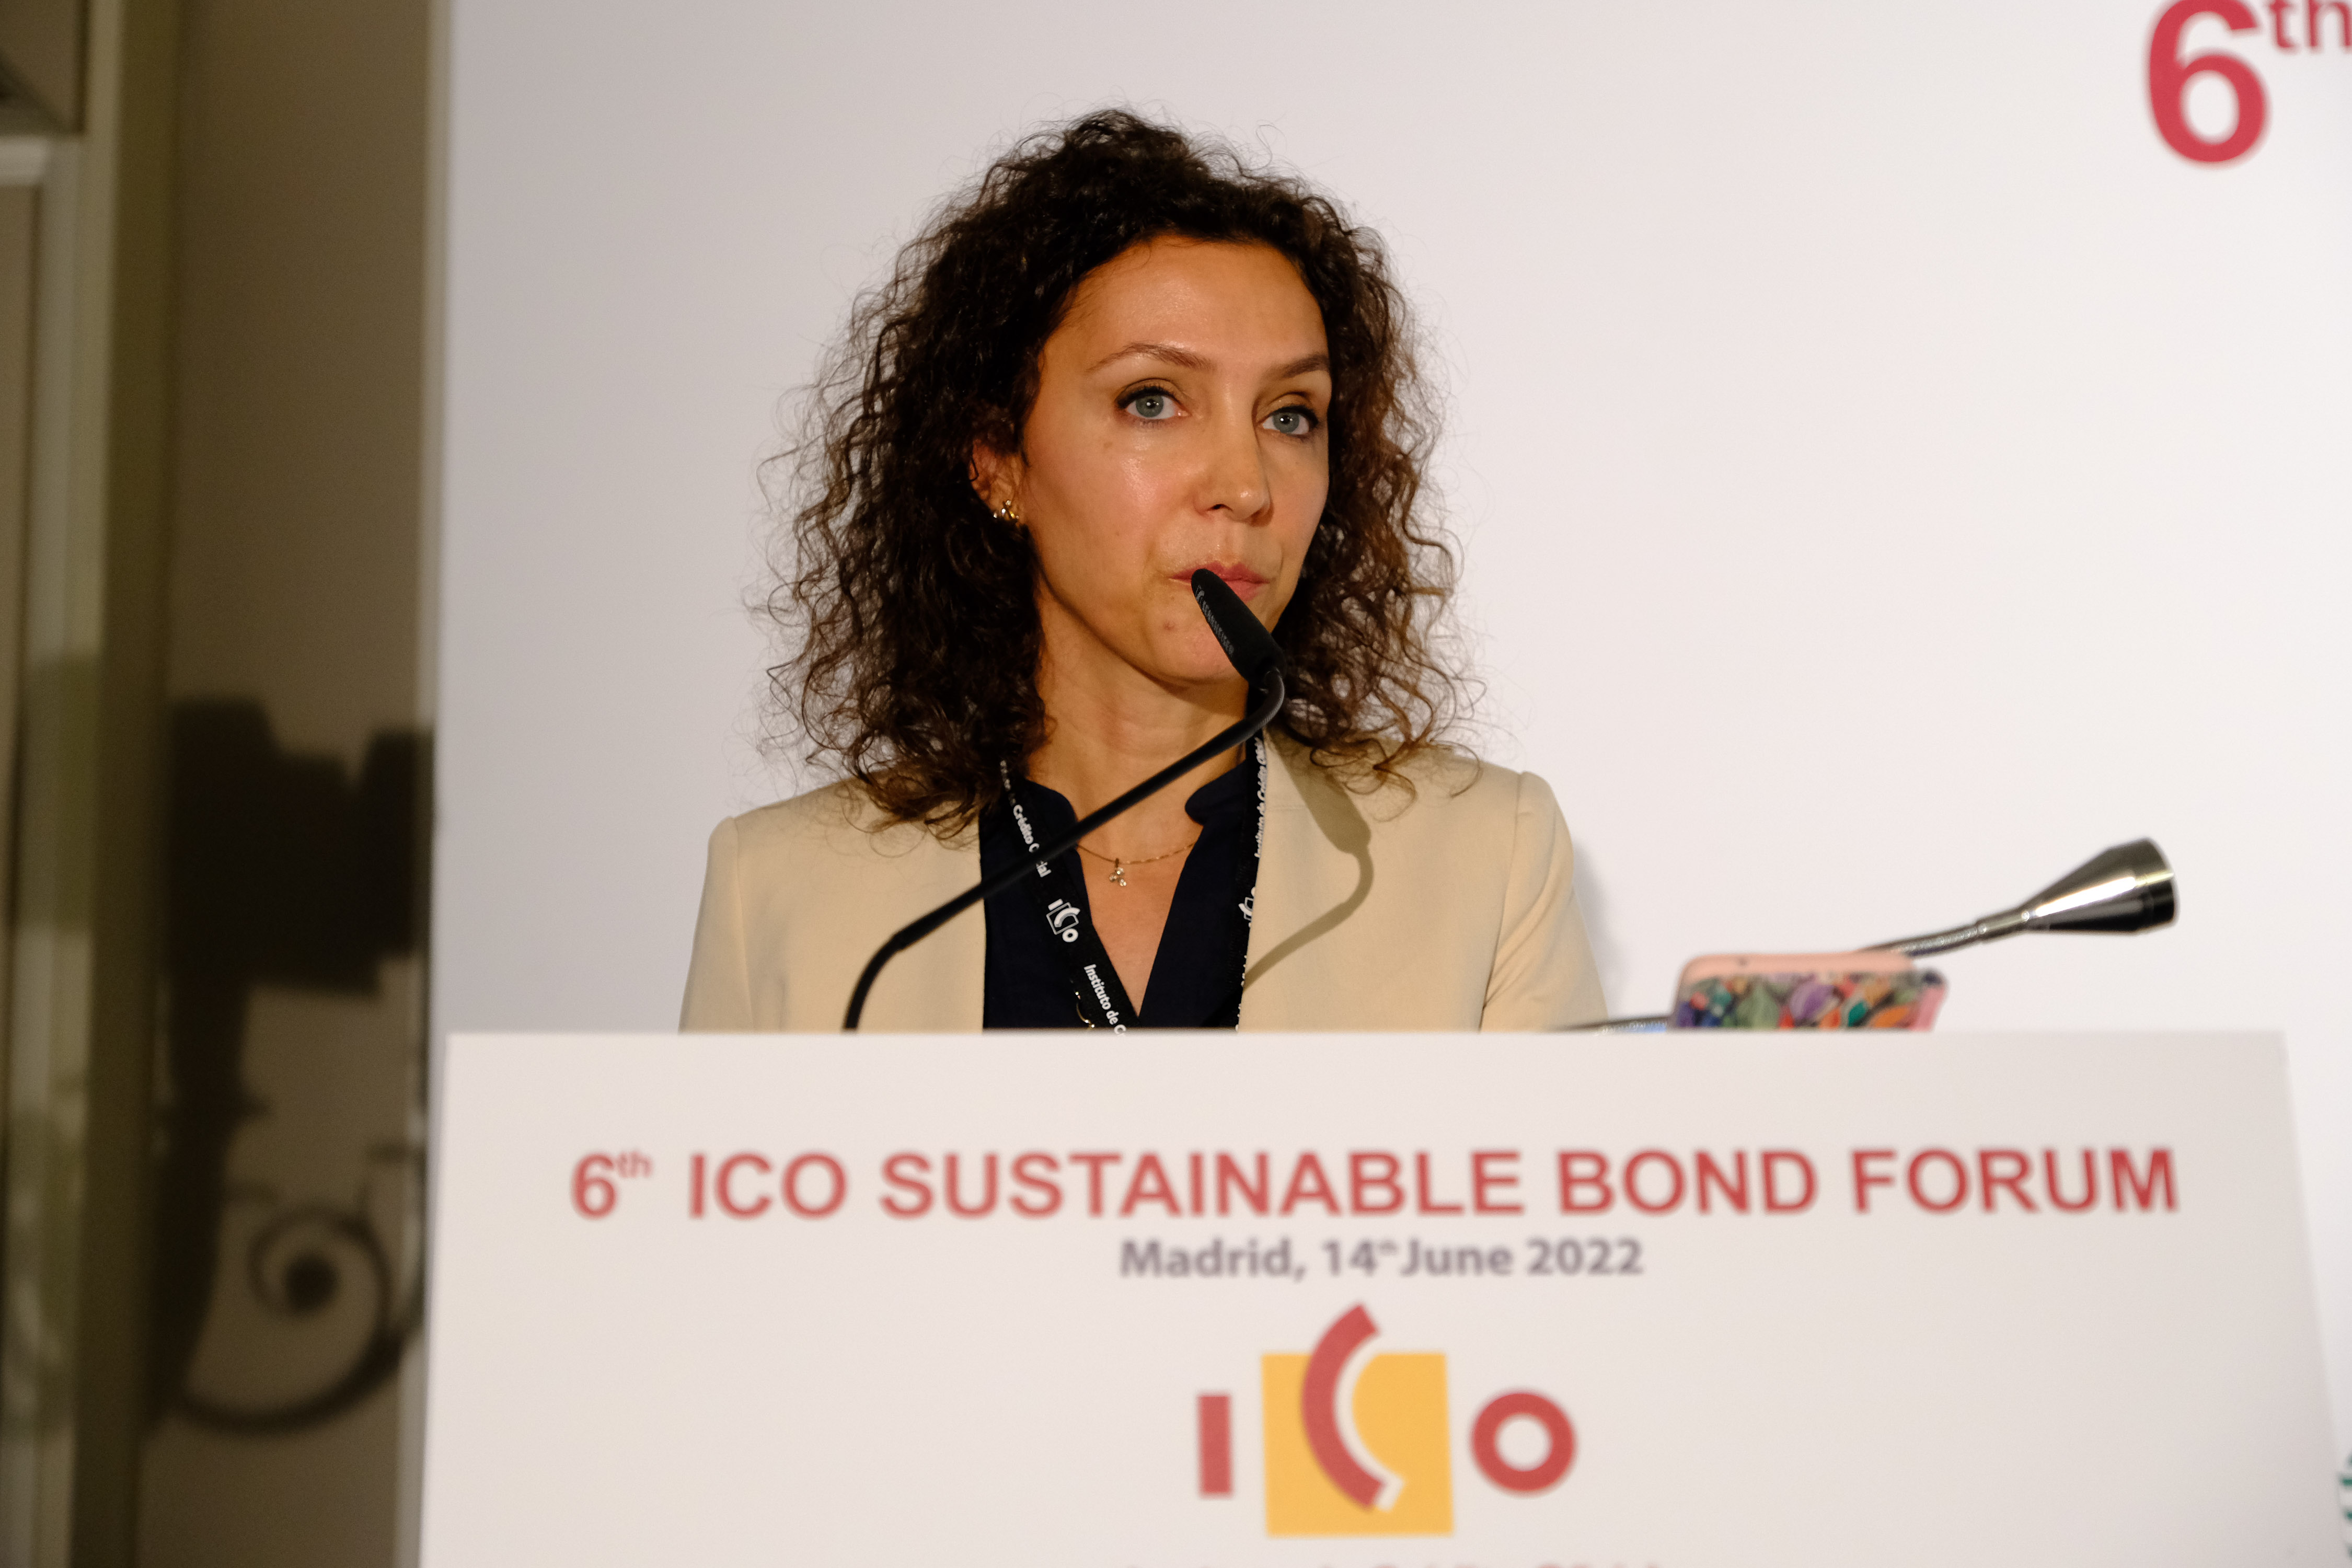 6th Sustainable ICO Bond Forum